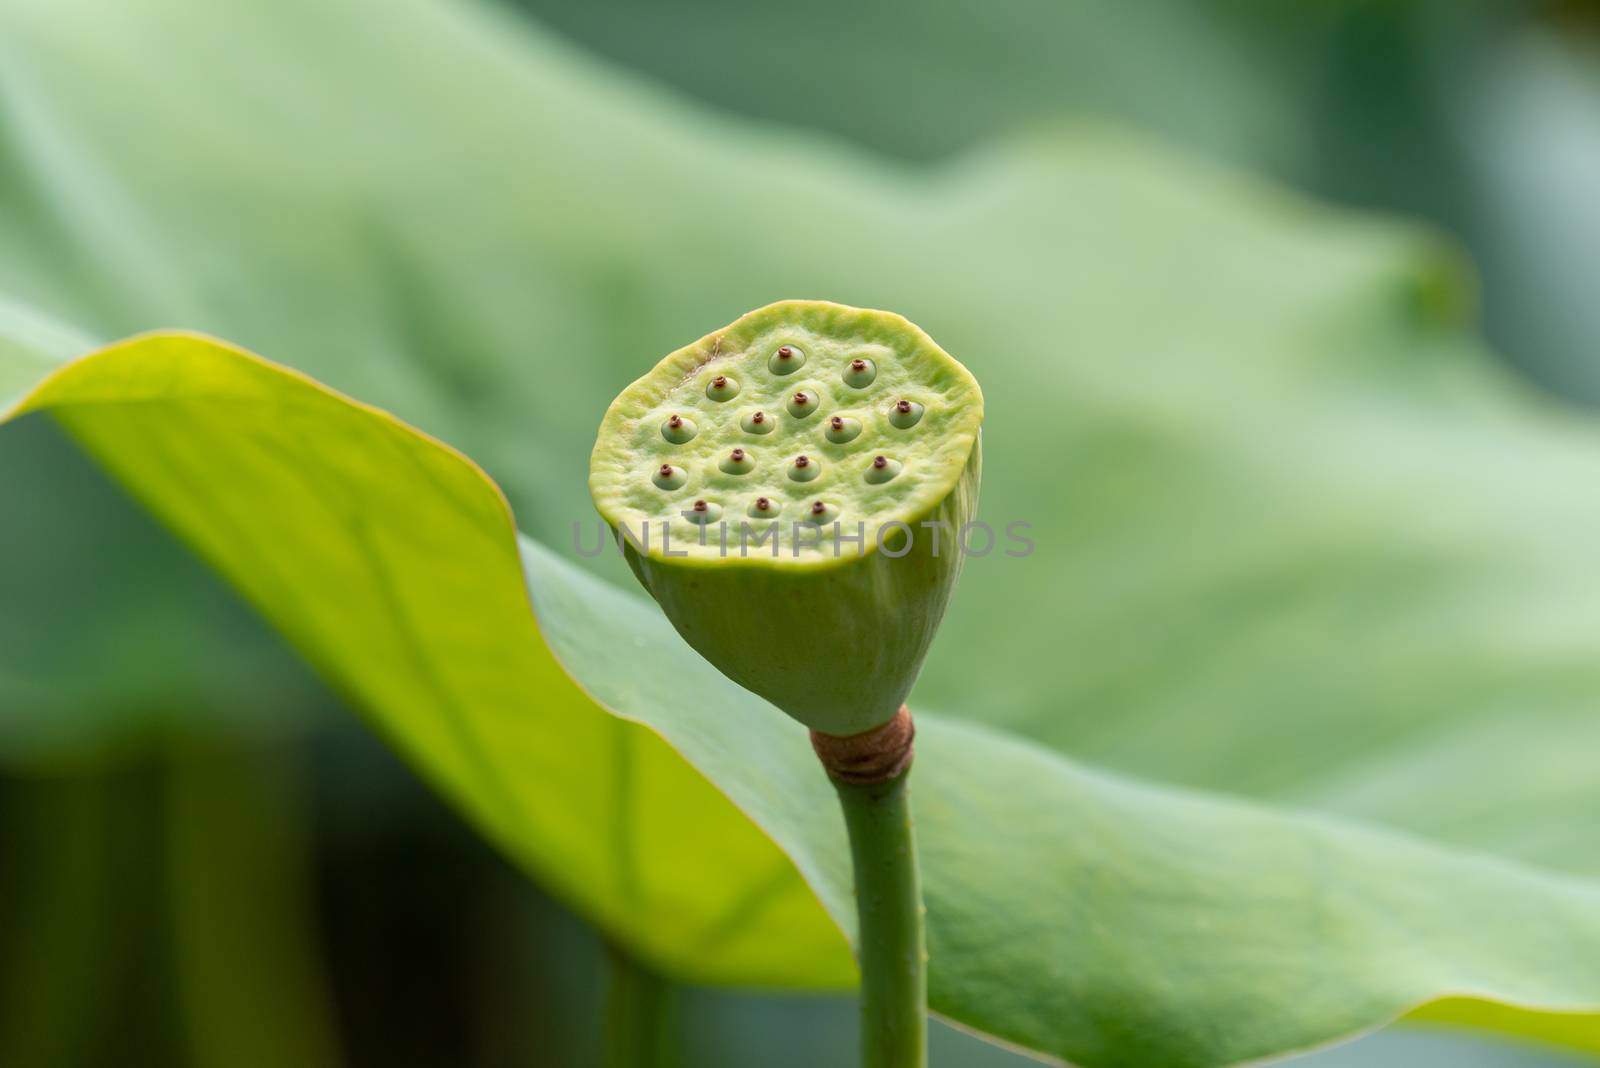 Lotus pod against green leaves by LP2Studio